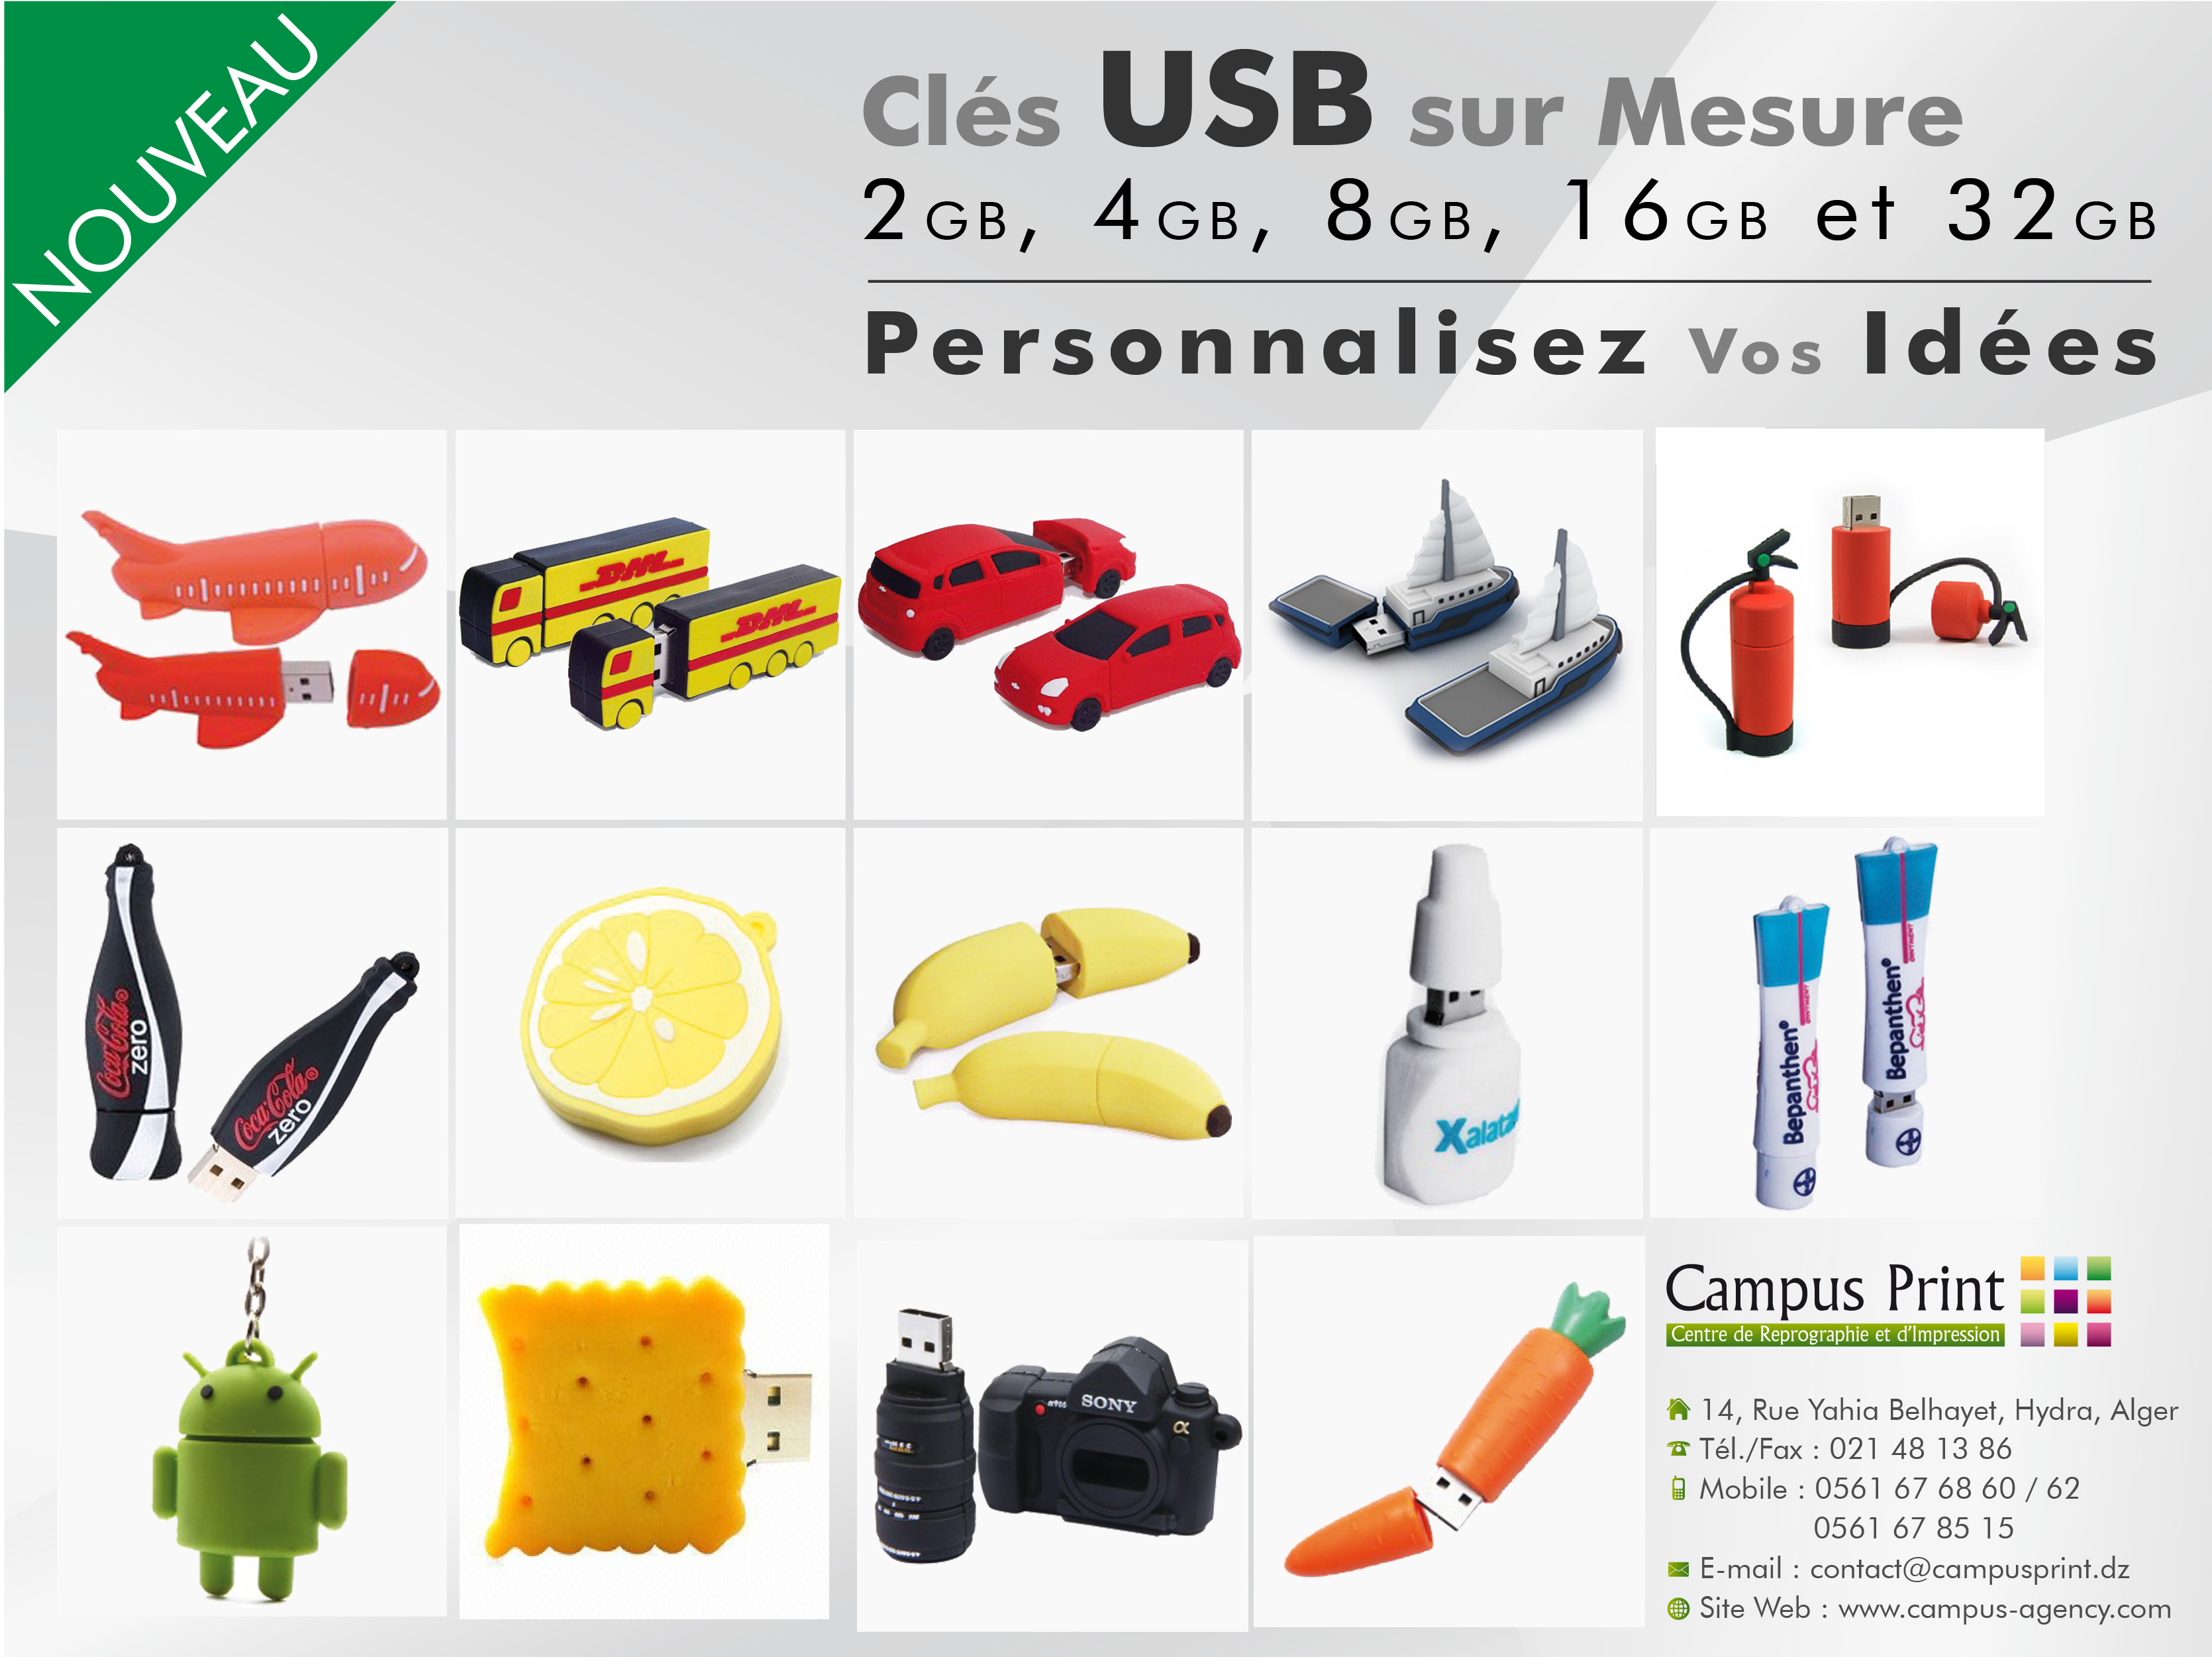 Cls USB personnalises